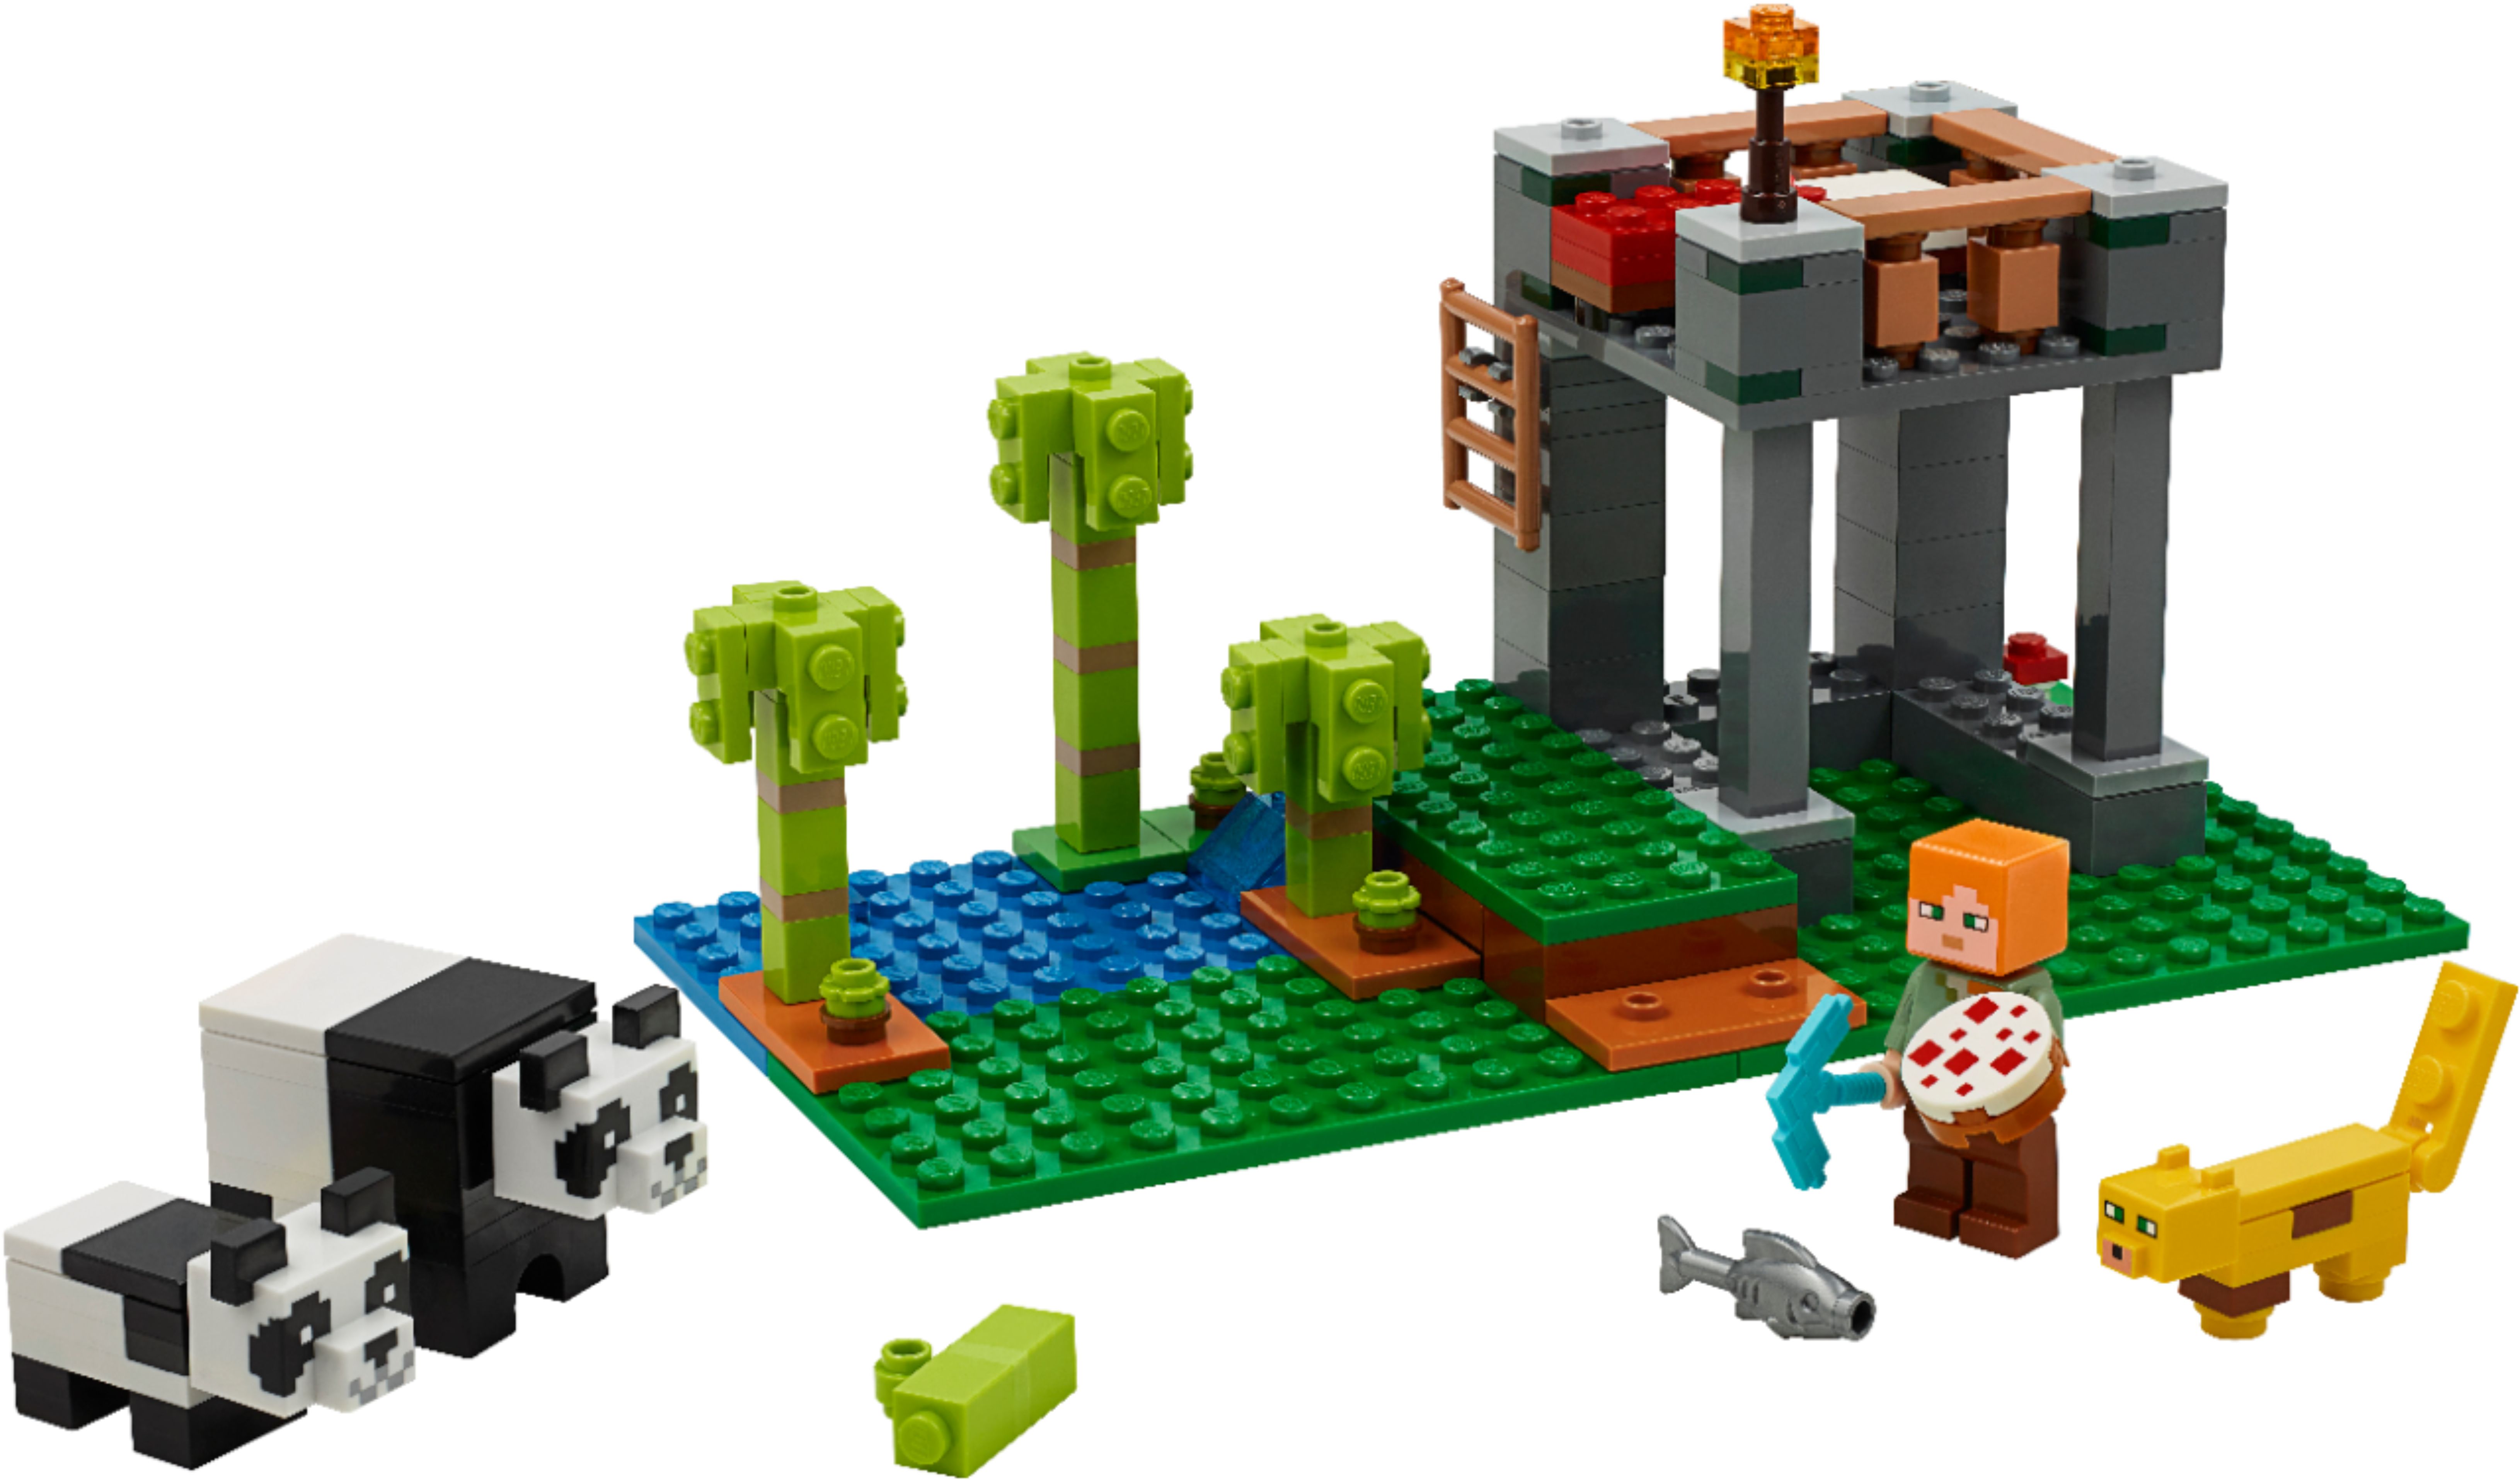 Best Buy: LEGO Minecraft Panda Nursery 21158 6288708